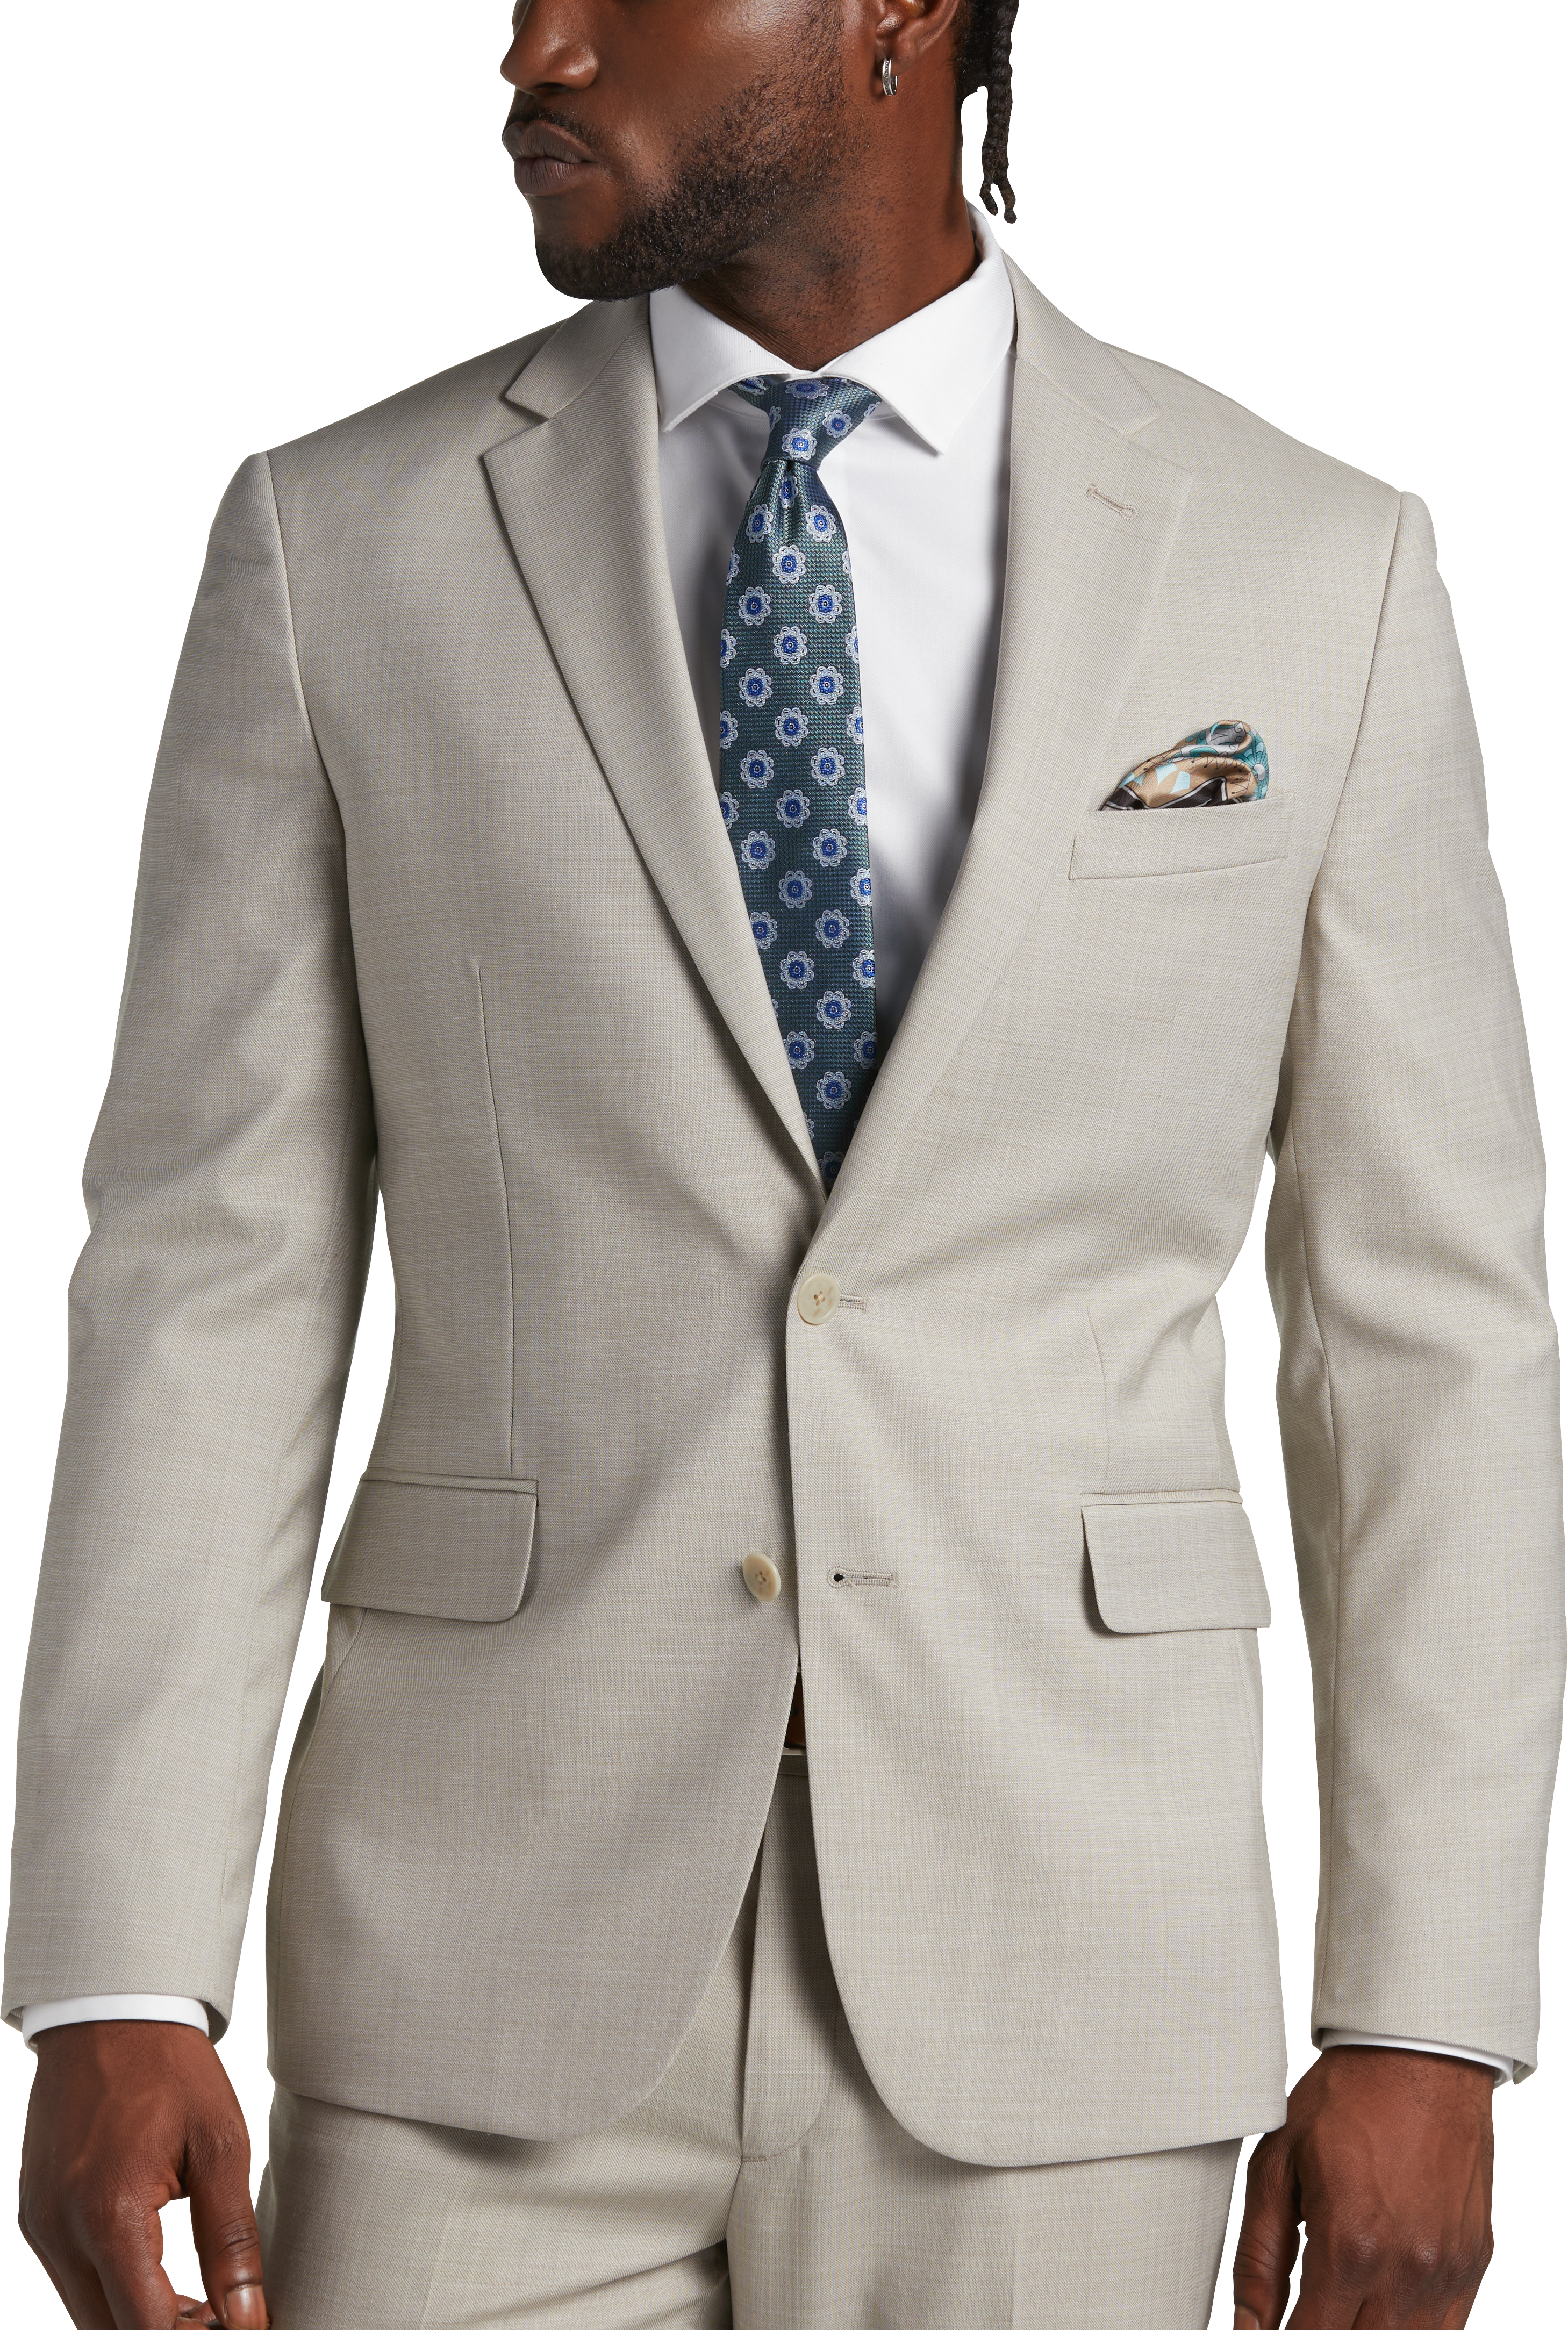 fax Geplooid Canberra JOE Joseph Abboud Slim Fit Suit Separates Coat, Tan Sharkskin - Men's Suits  | Men's Wearhouse